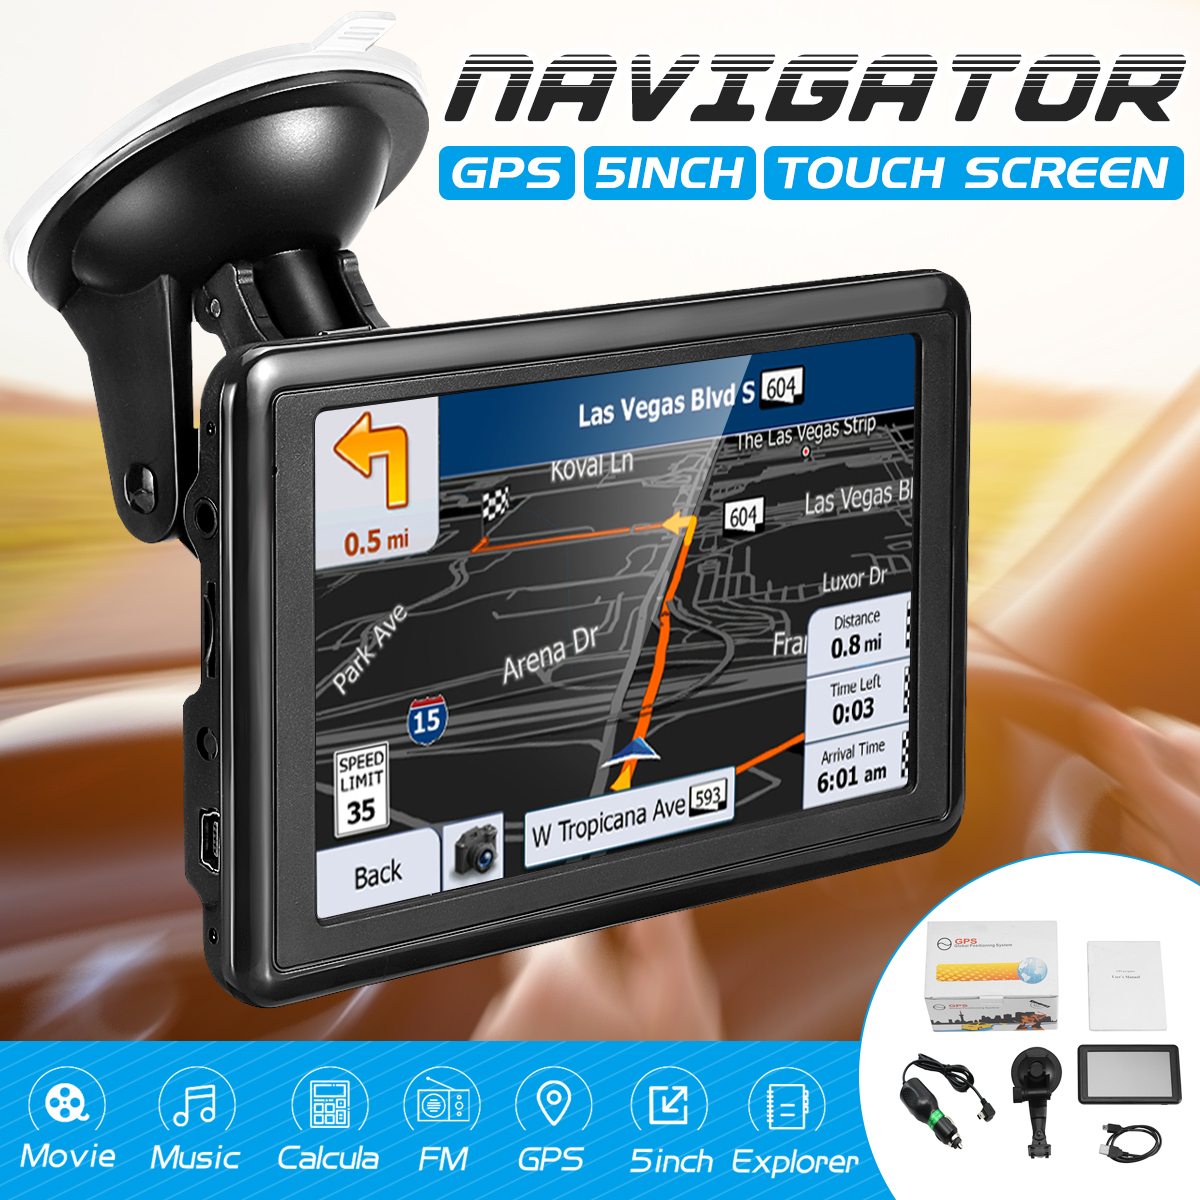 5-inch-Touch-Screen-HD-Car-GPS-Navigation-8GB128MB-FM-US-Canada-Europe-Southeast-Asia-Australia-Map--1811140-1